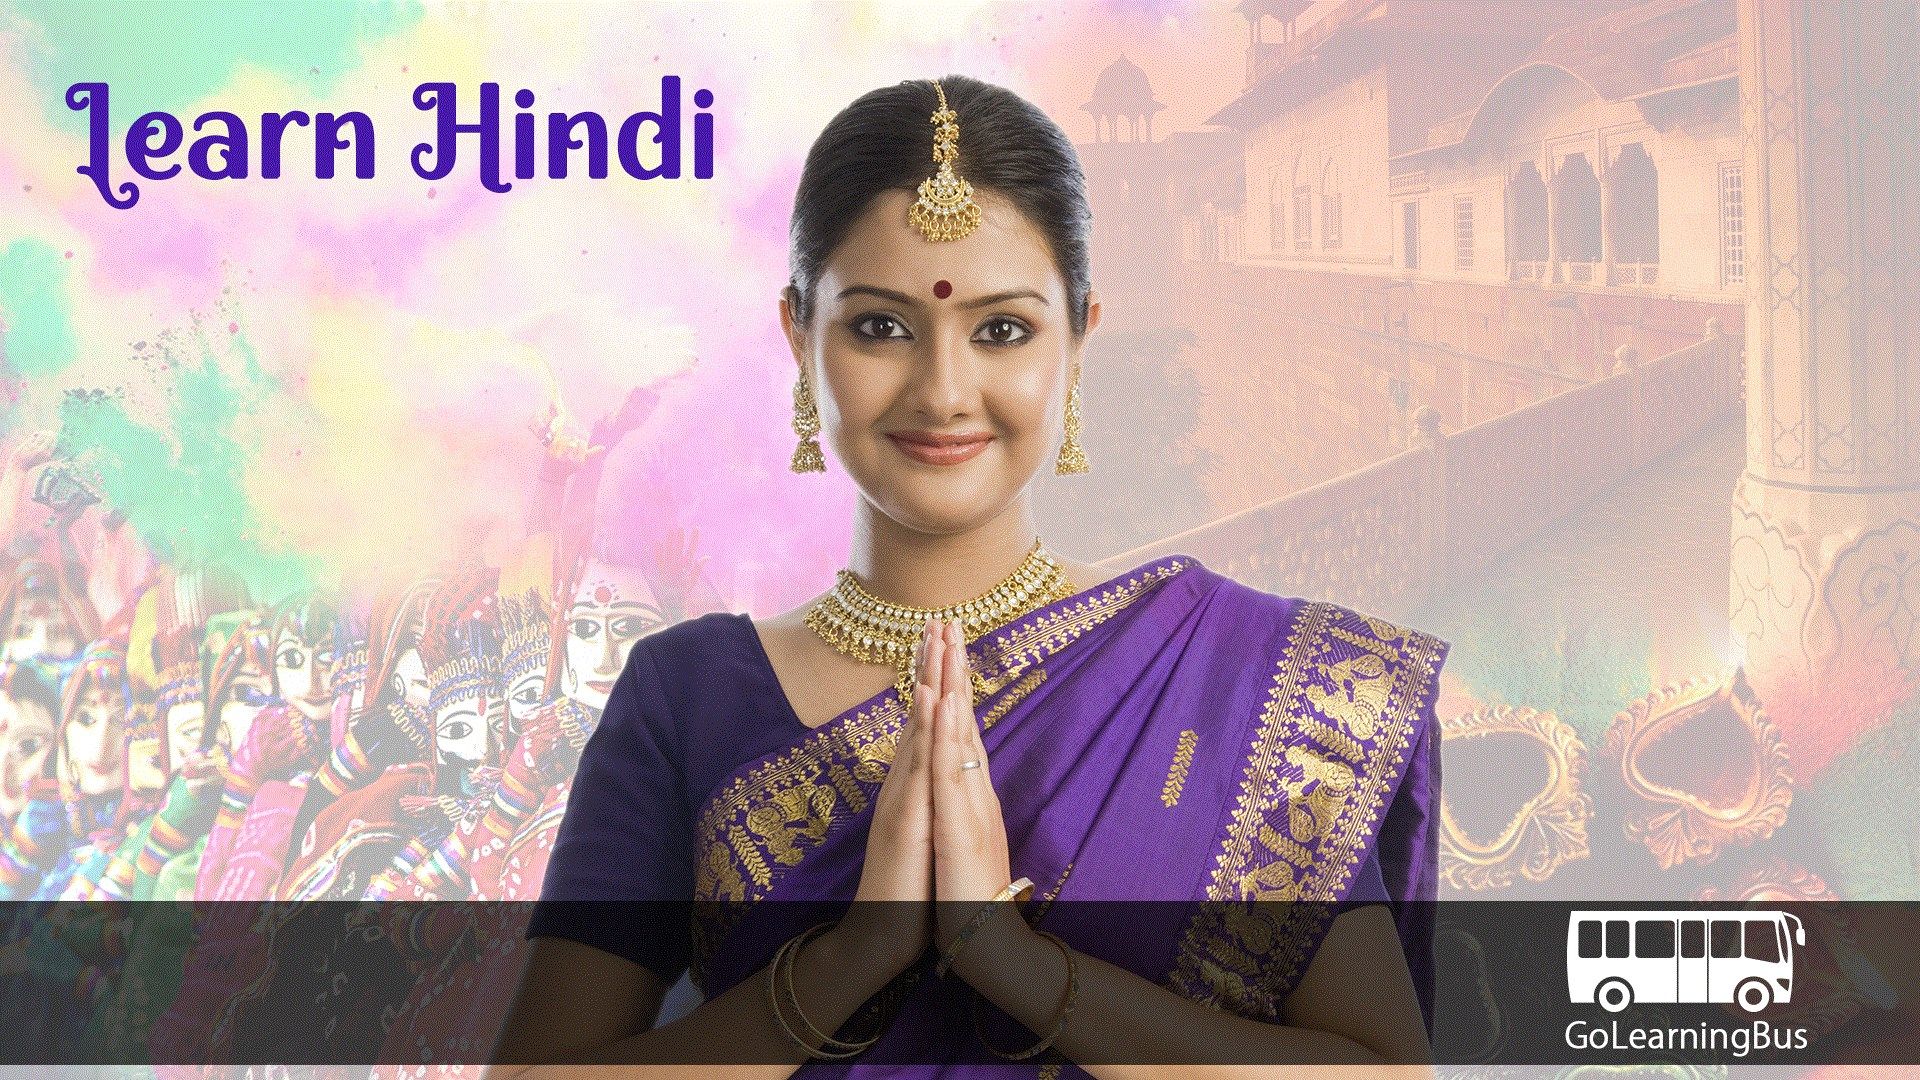 Learn Hindi via videos by GoLearningBus